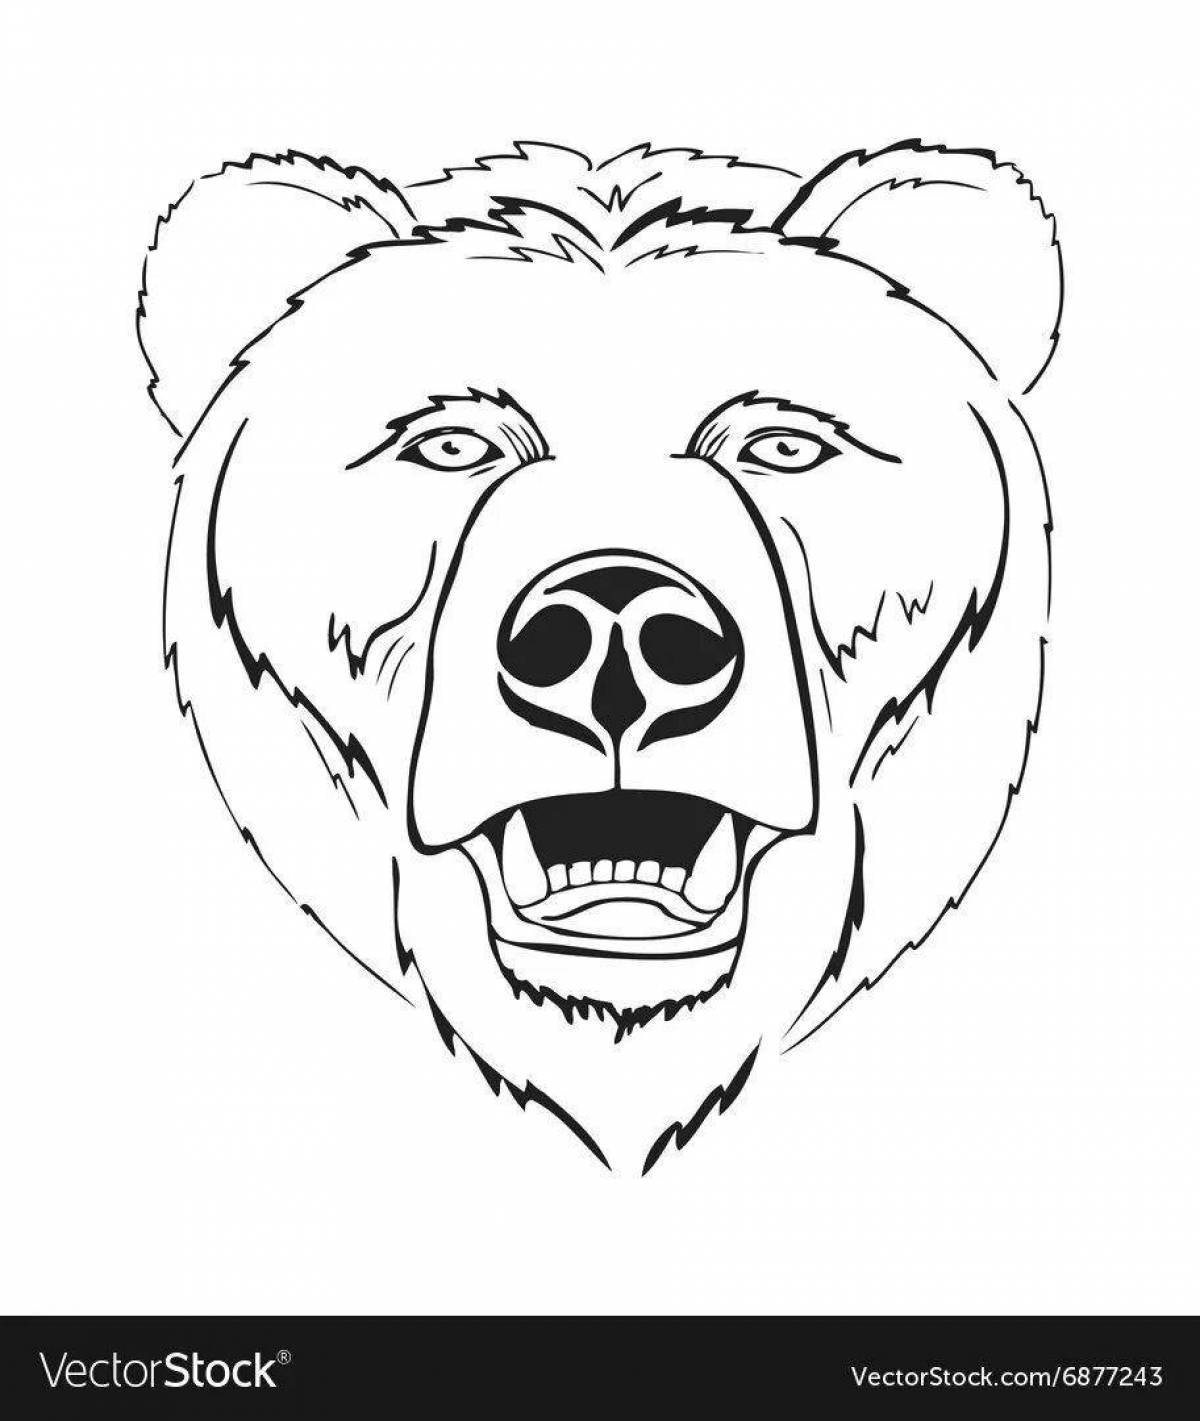 Joyful bear face coloring book